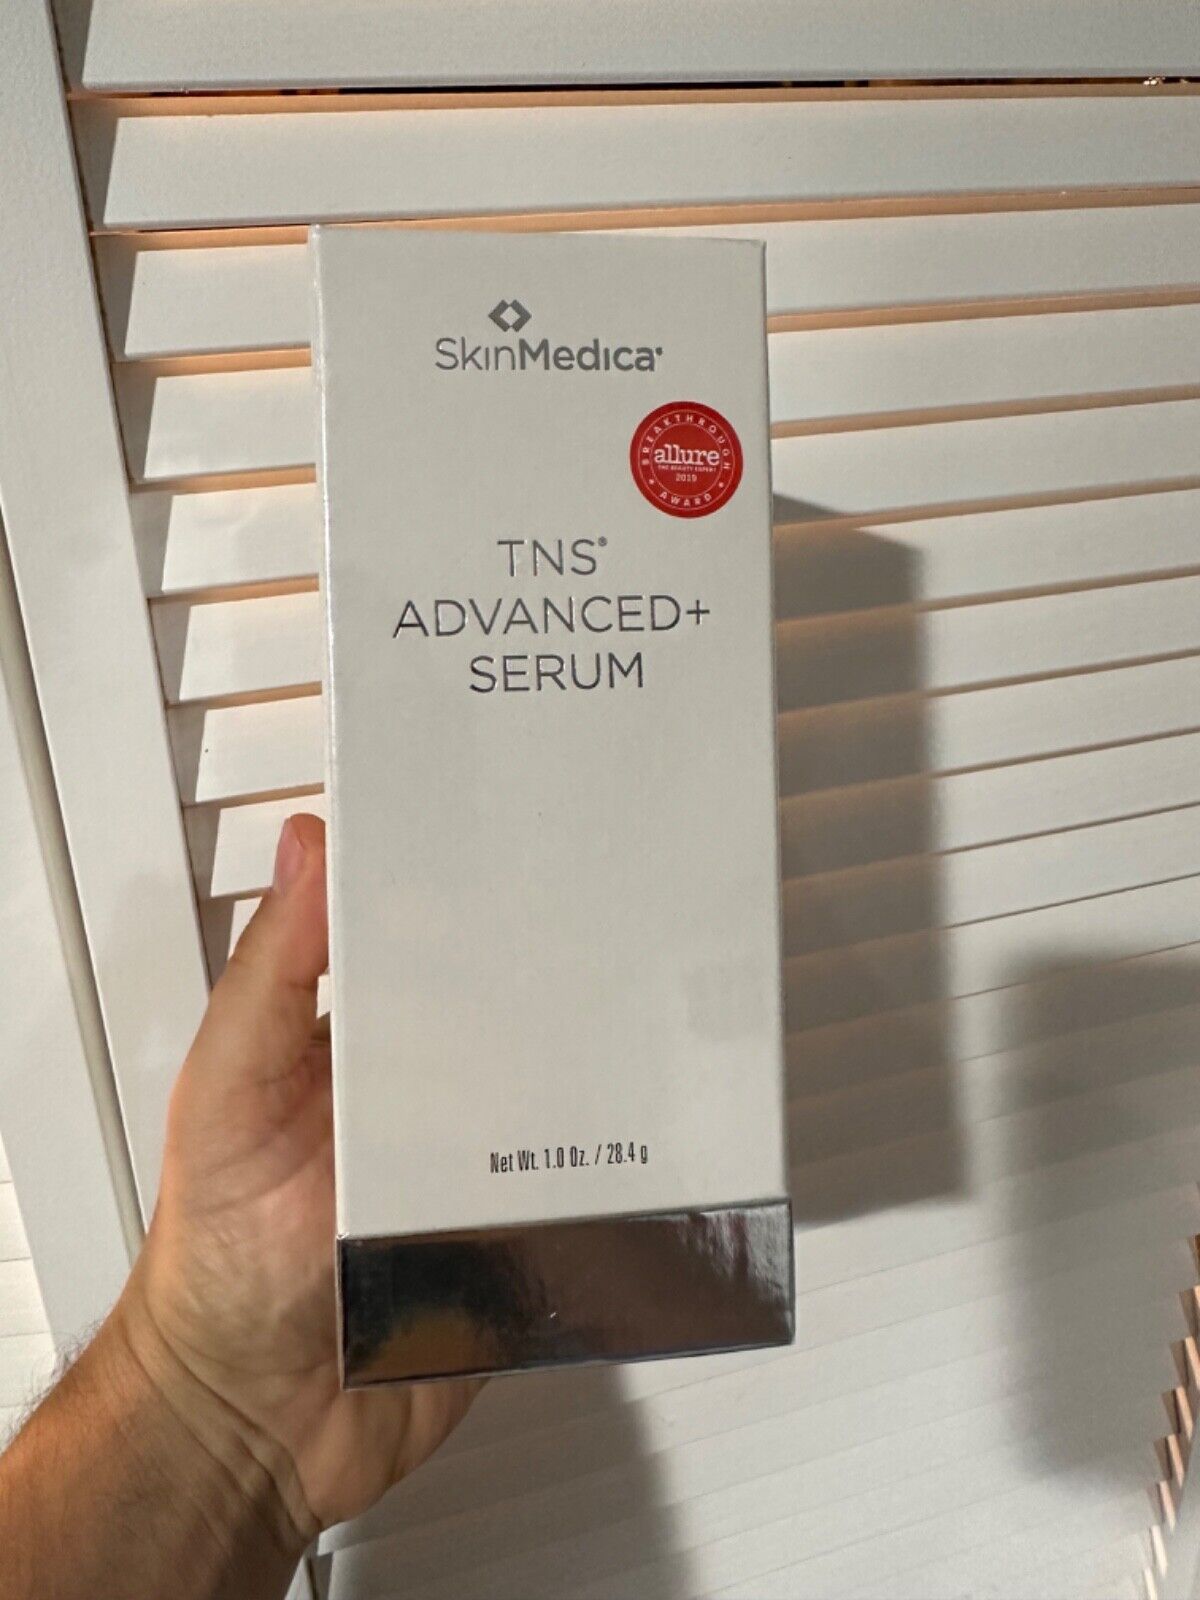 SkinMedica TNS Advanced + Serum 1oz  *New In Box* Sealed EXP 10/2025.